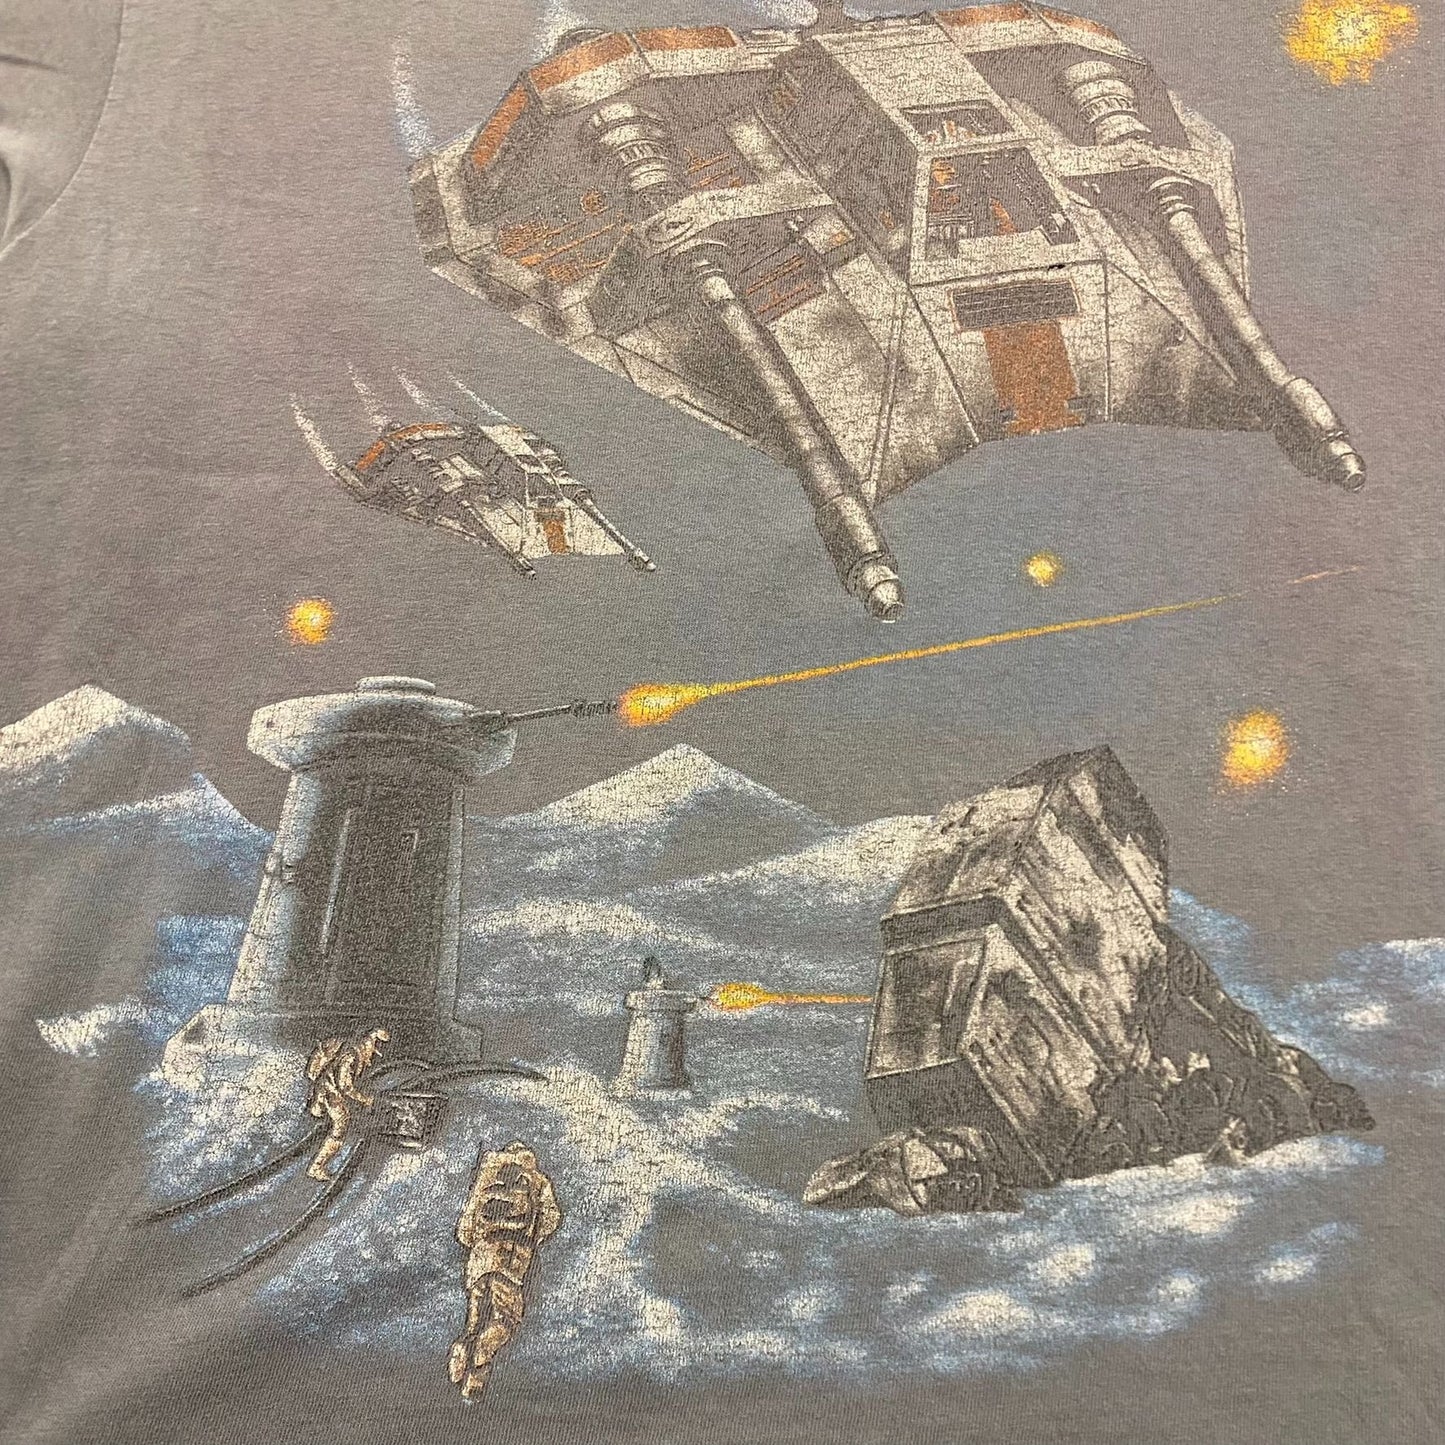 Star Wars AT-AT Hoth Battle Vintage 90s Movie T-Shirt